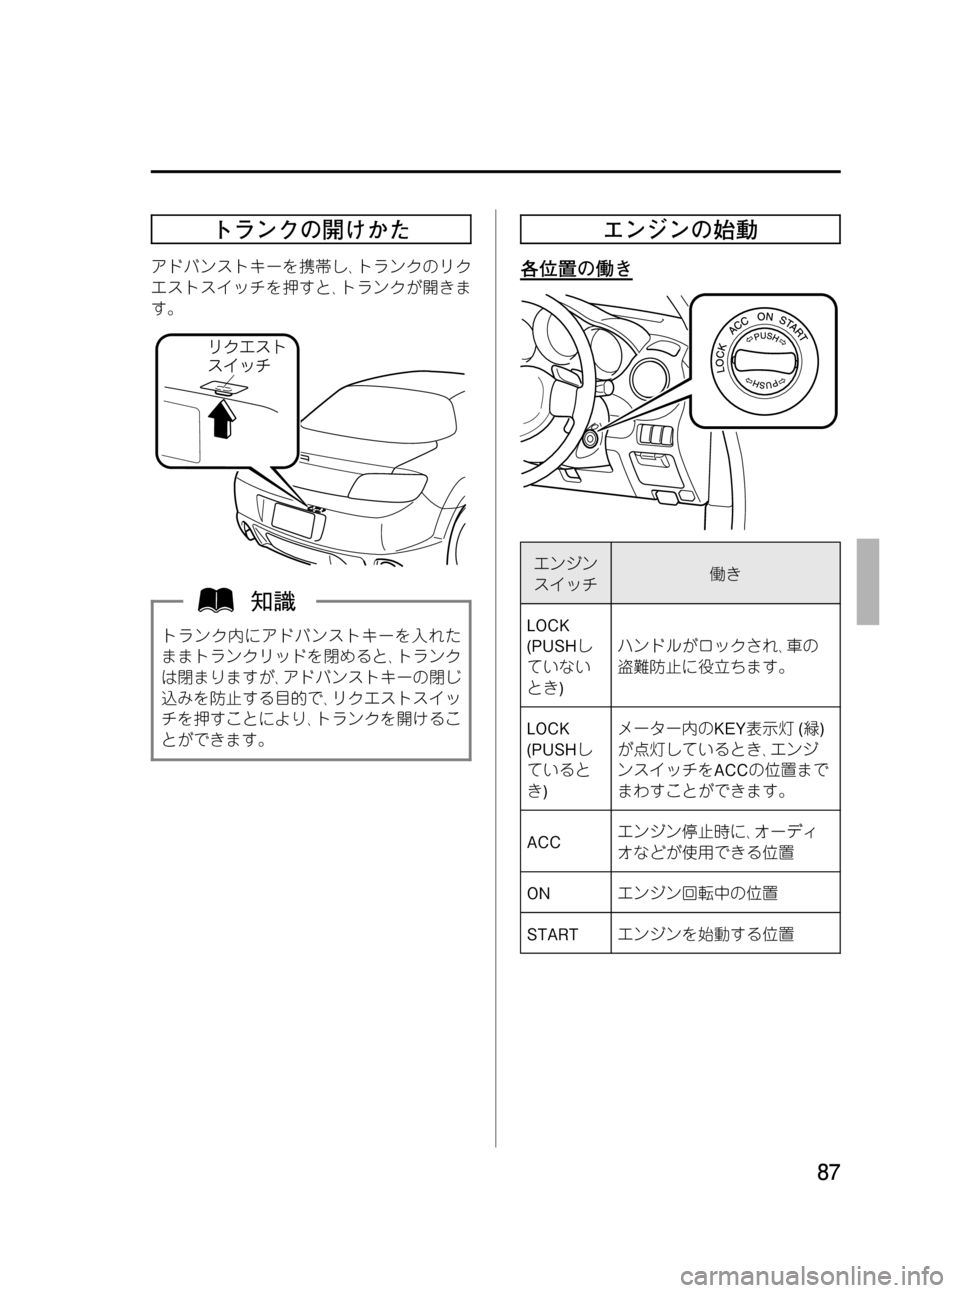 MAZDA MODEL RX 8 2008  取扱説明書 (in Japanese) Black plate (87,1)
トランクの開けかた
アドバンストキーを携帯し､トランクのリク
エストスイッチを押すと､トランクが開きま
す。
トランク内にアド